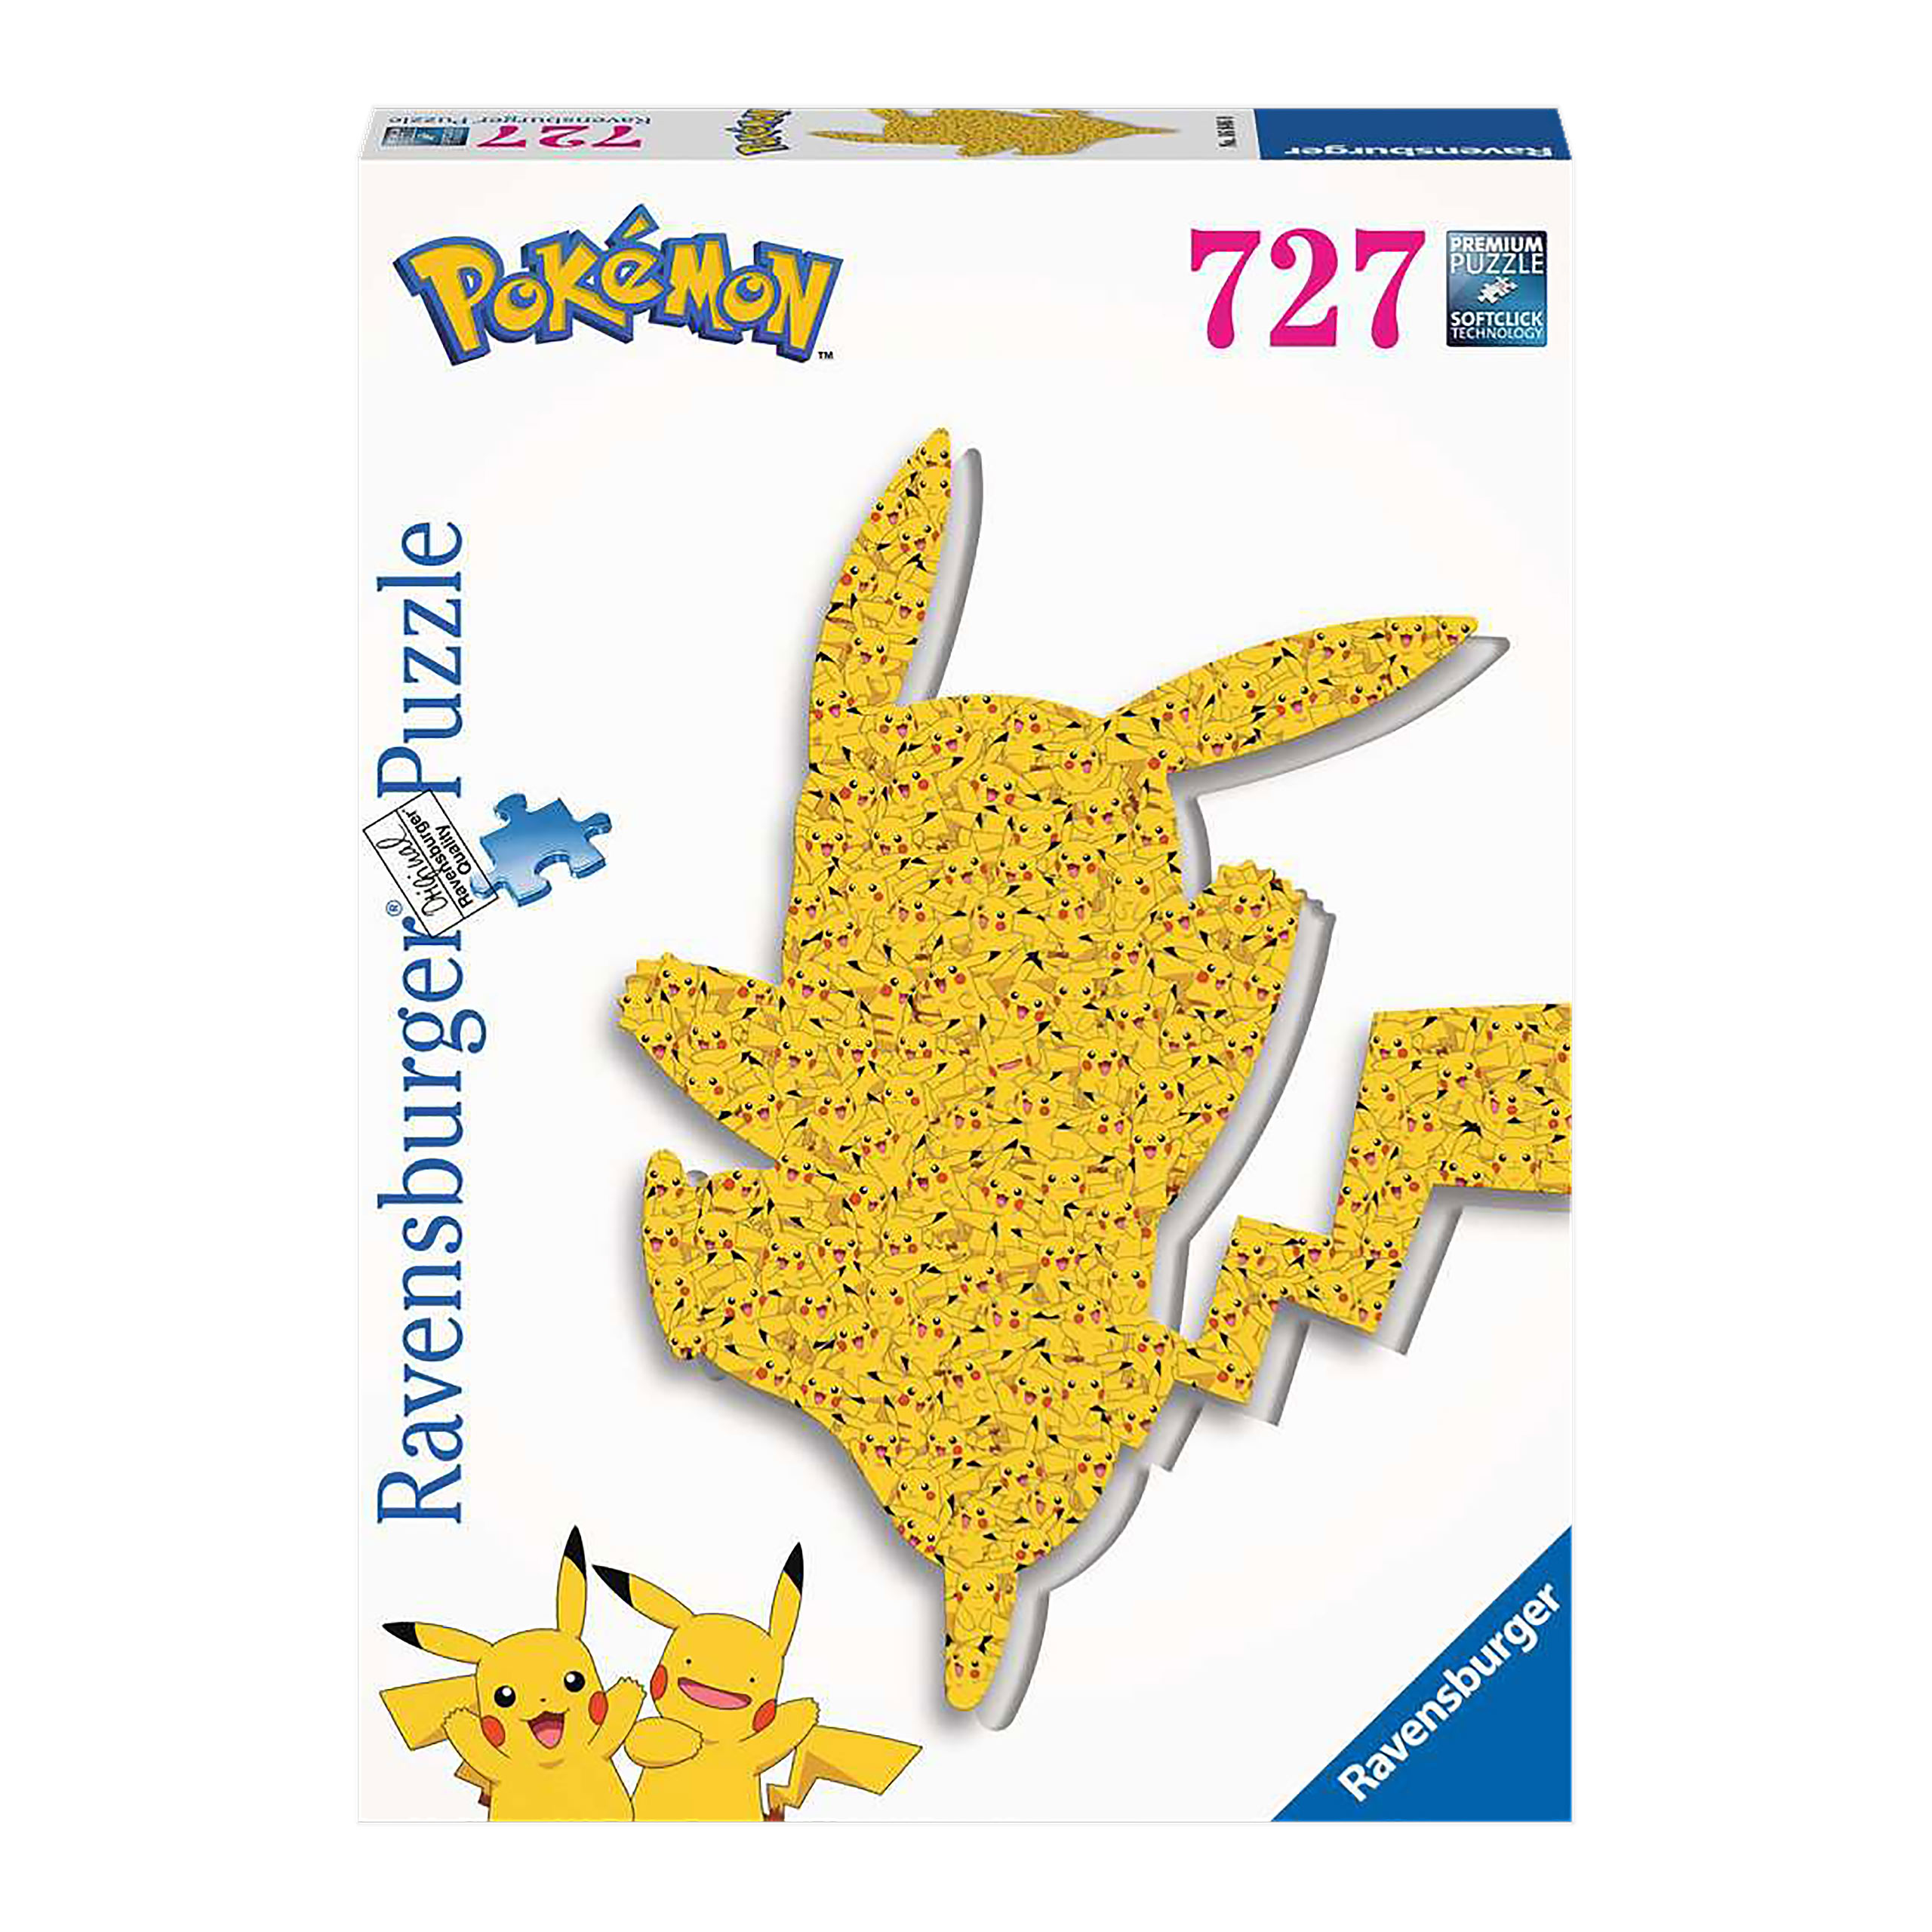 Pokemon - Pikachu Figure Puzzle